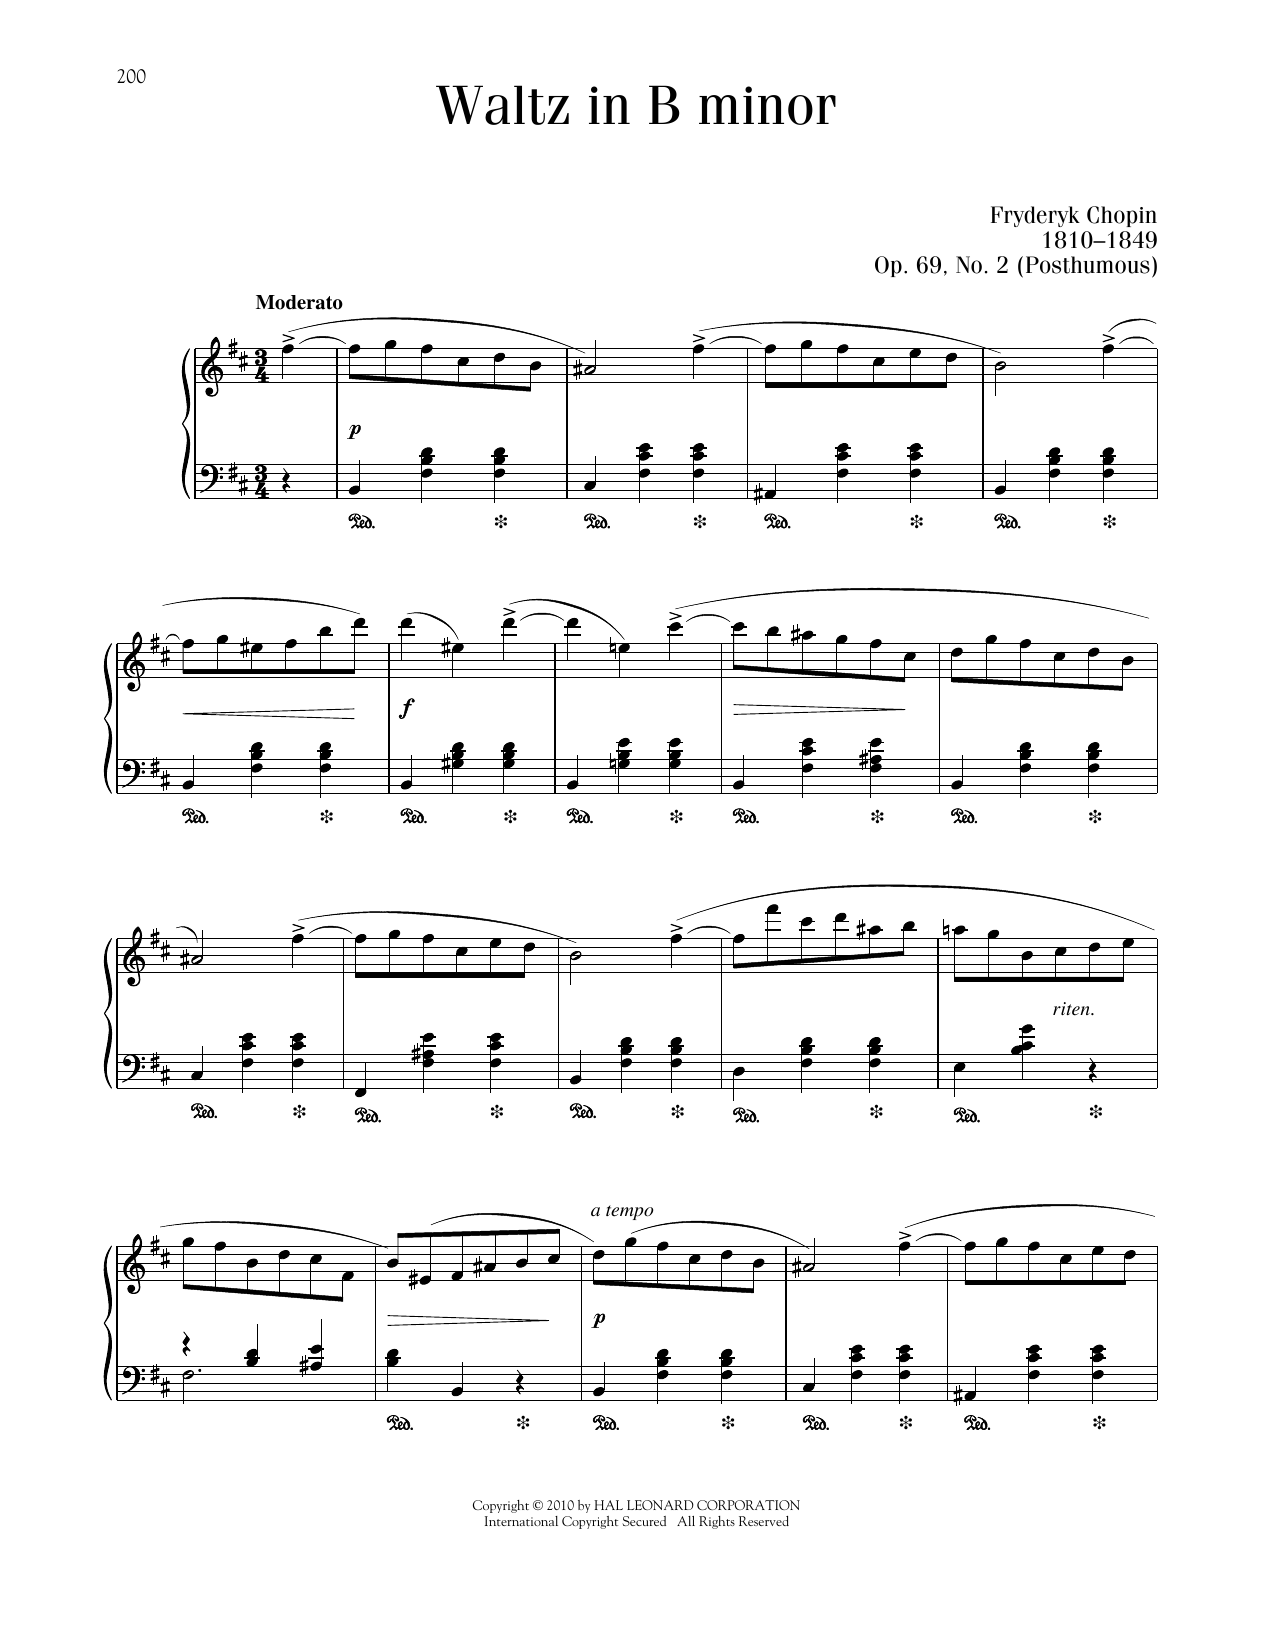 Frederic Chopin Waltz In B Minor, Op. 69, No. 2 sheet music notes printable PDF score